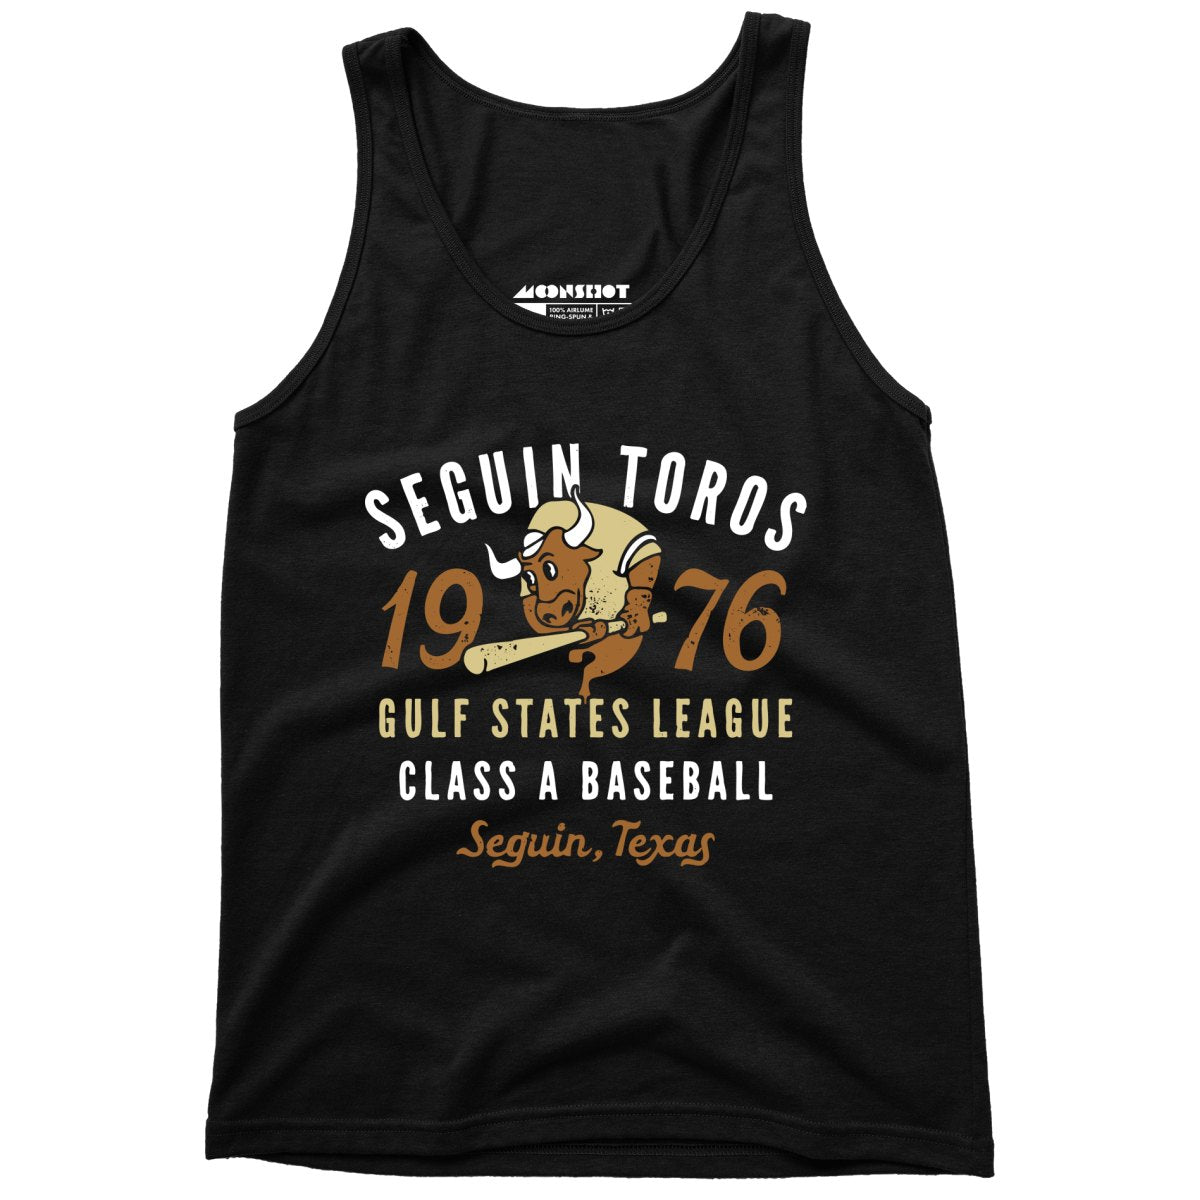 Seguin Toros - Texas - Vintage Defunct Baseball Teams - Unisex Tank Top